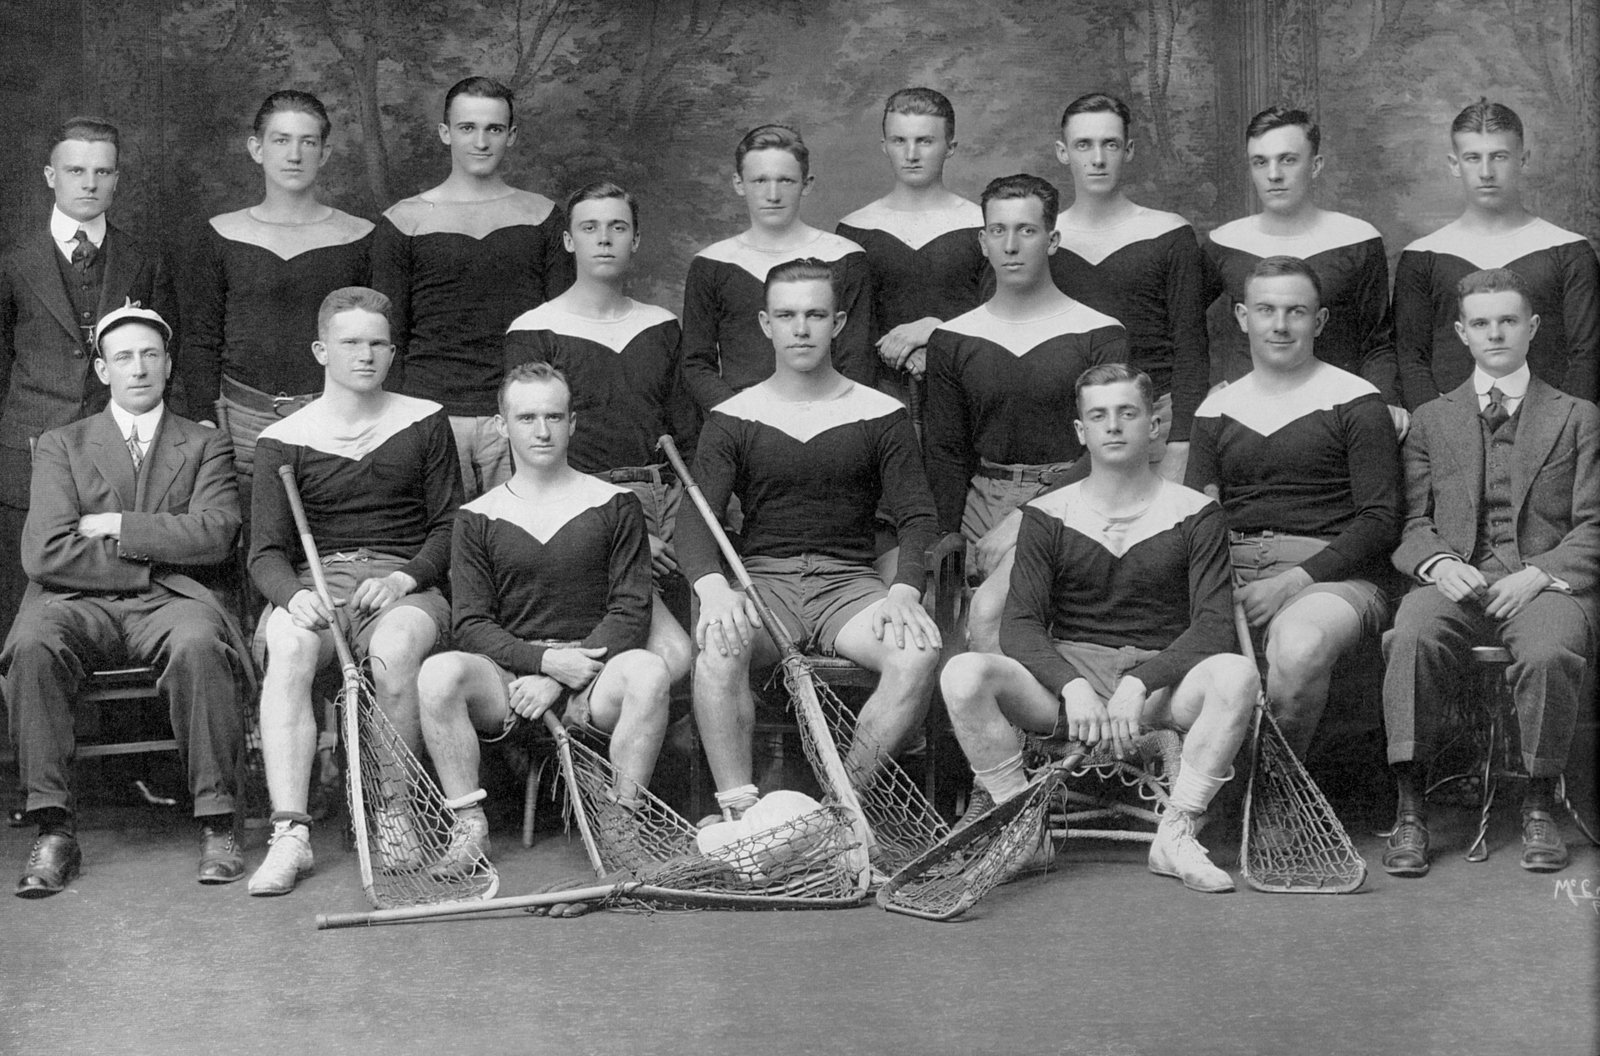 A portrait of the 1916 U.S. national championship lacrosse team of Lehigh University, taken in Bethlehem, Pennsylvania.